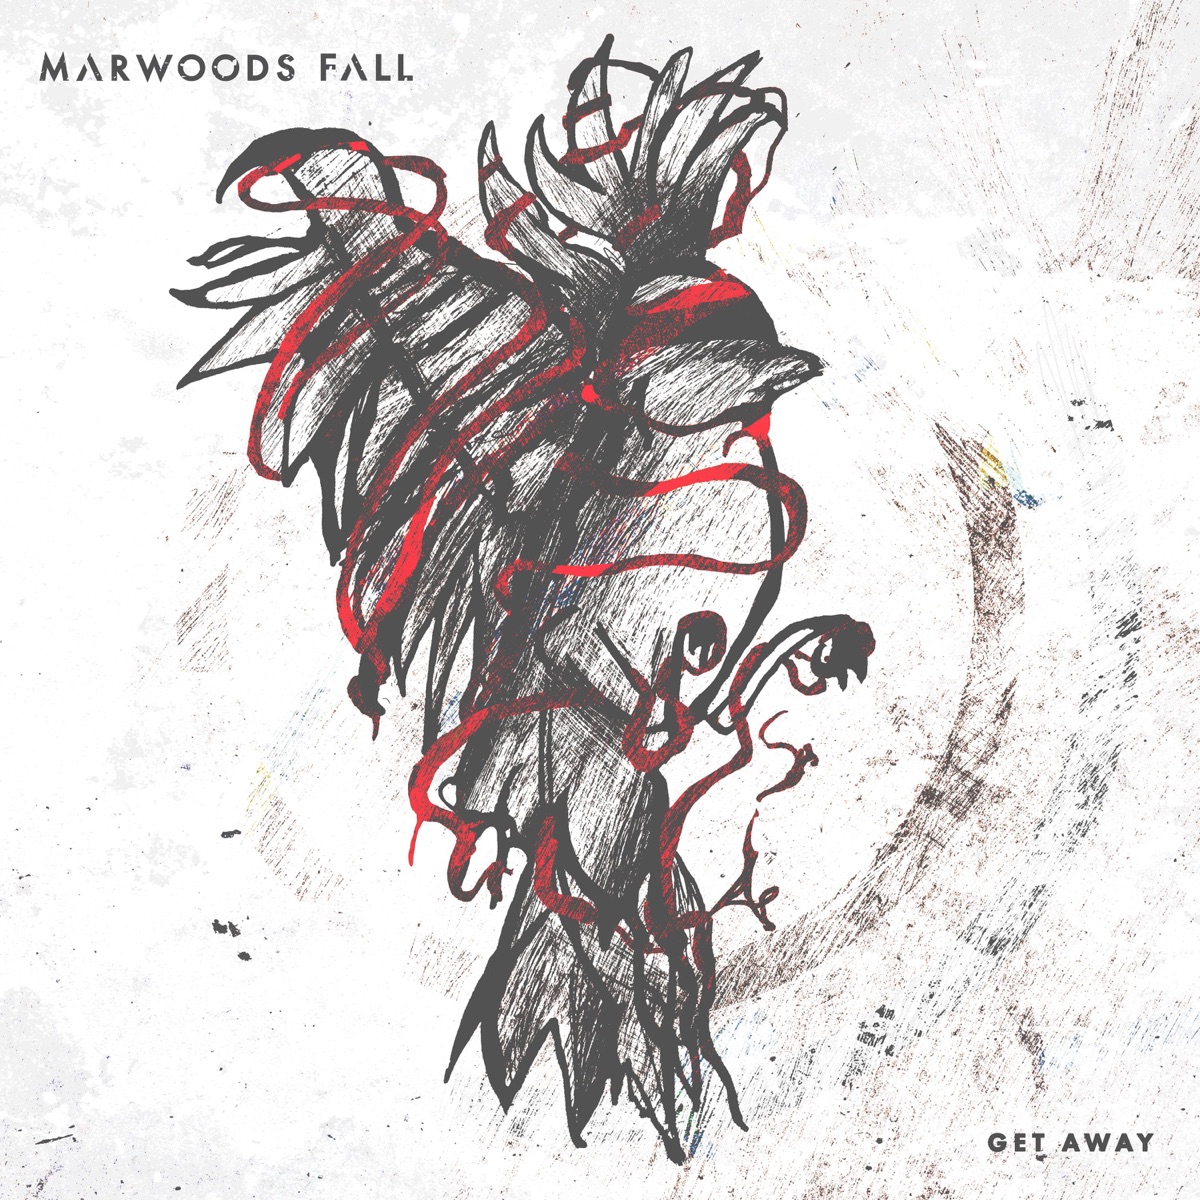 Marwood's Fall - Get Away